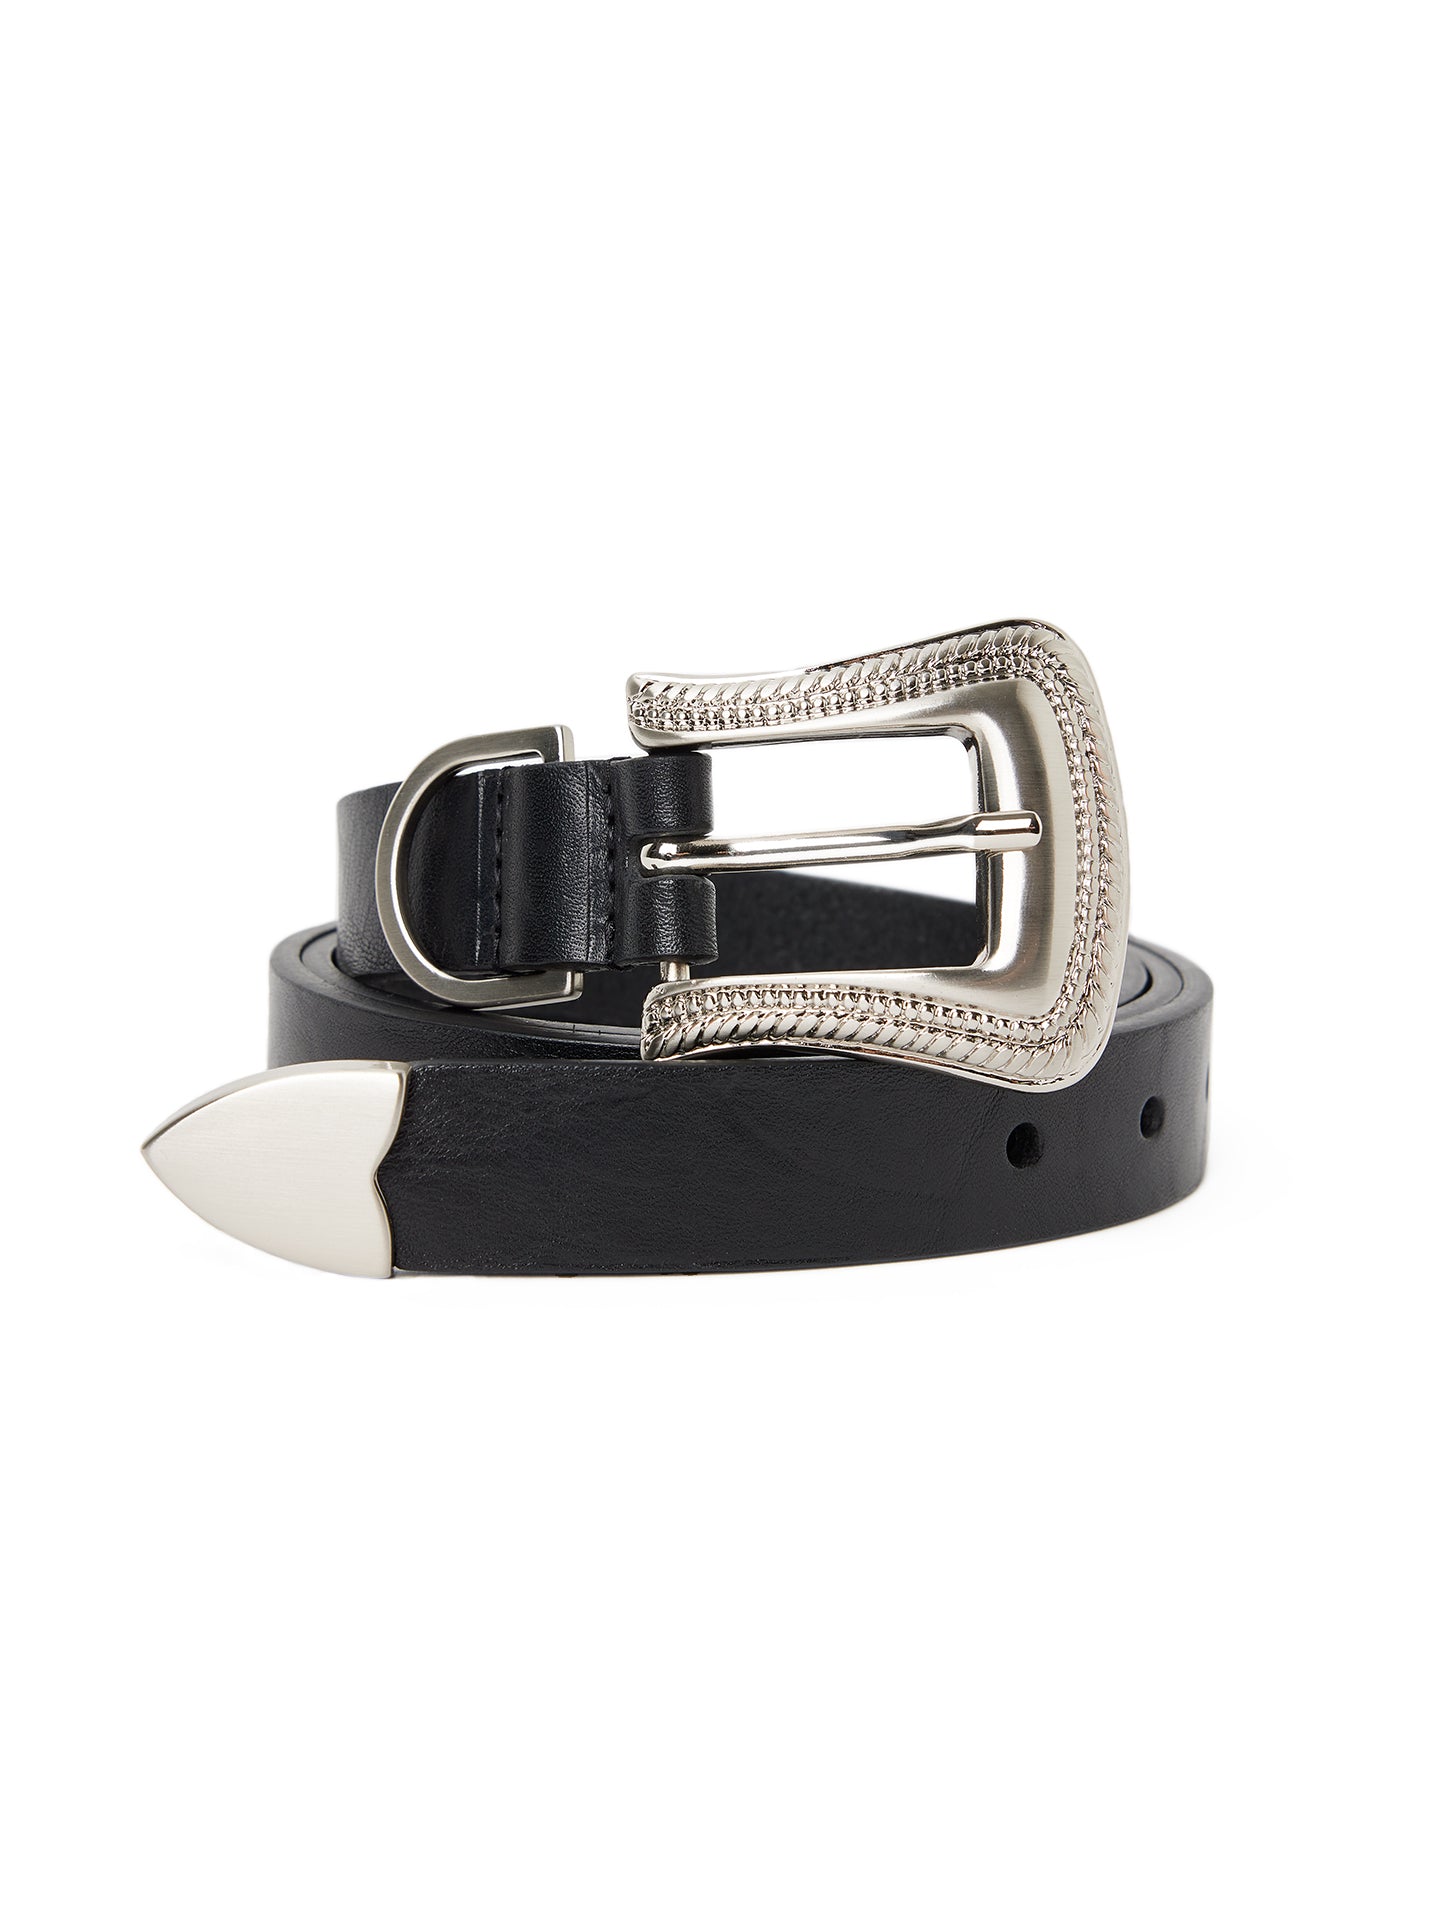 Black suede belt - silver buckle